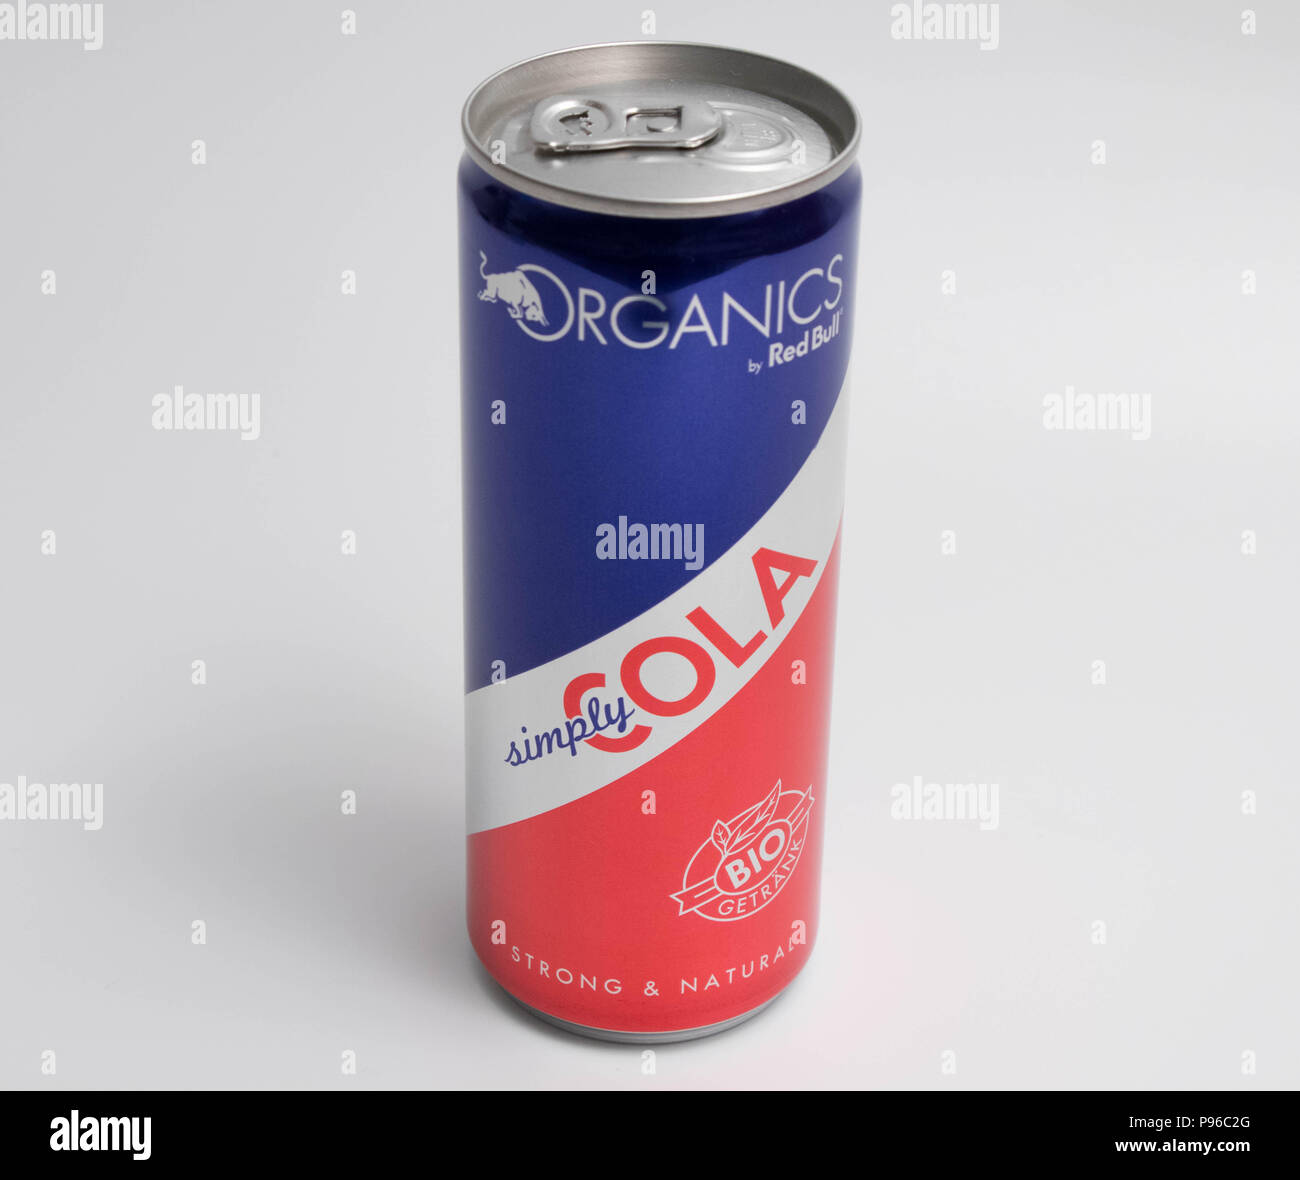 Red Bull coca cola simplement organique Photo Stock - Alamy